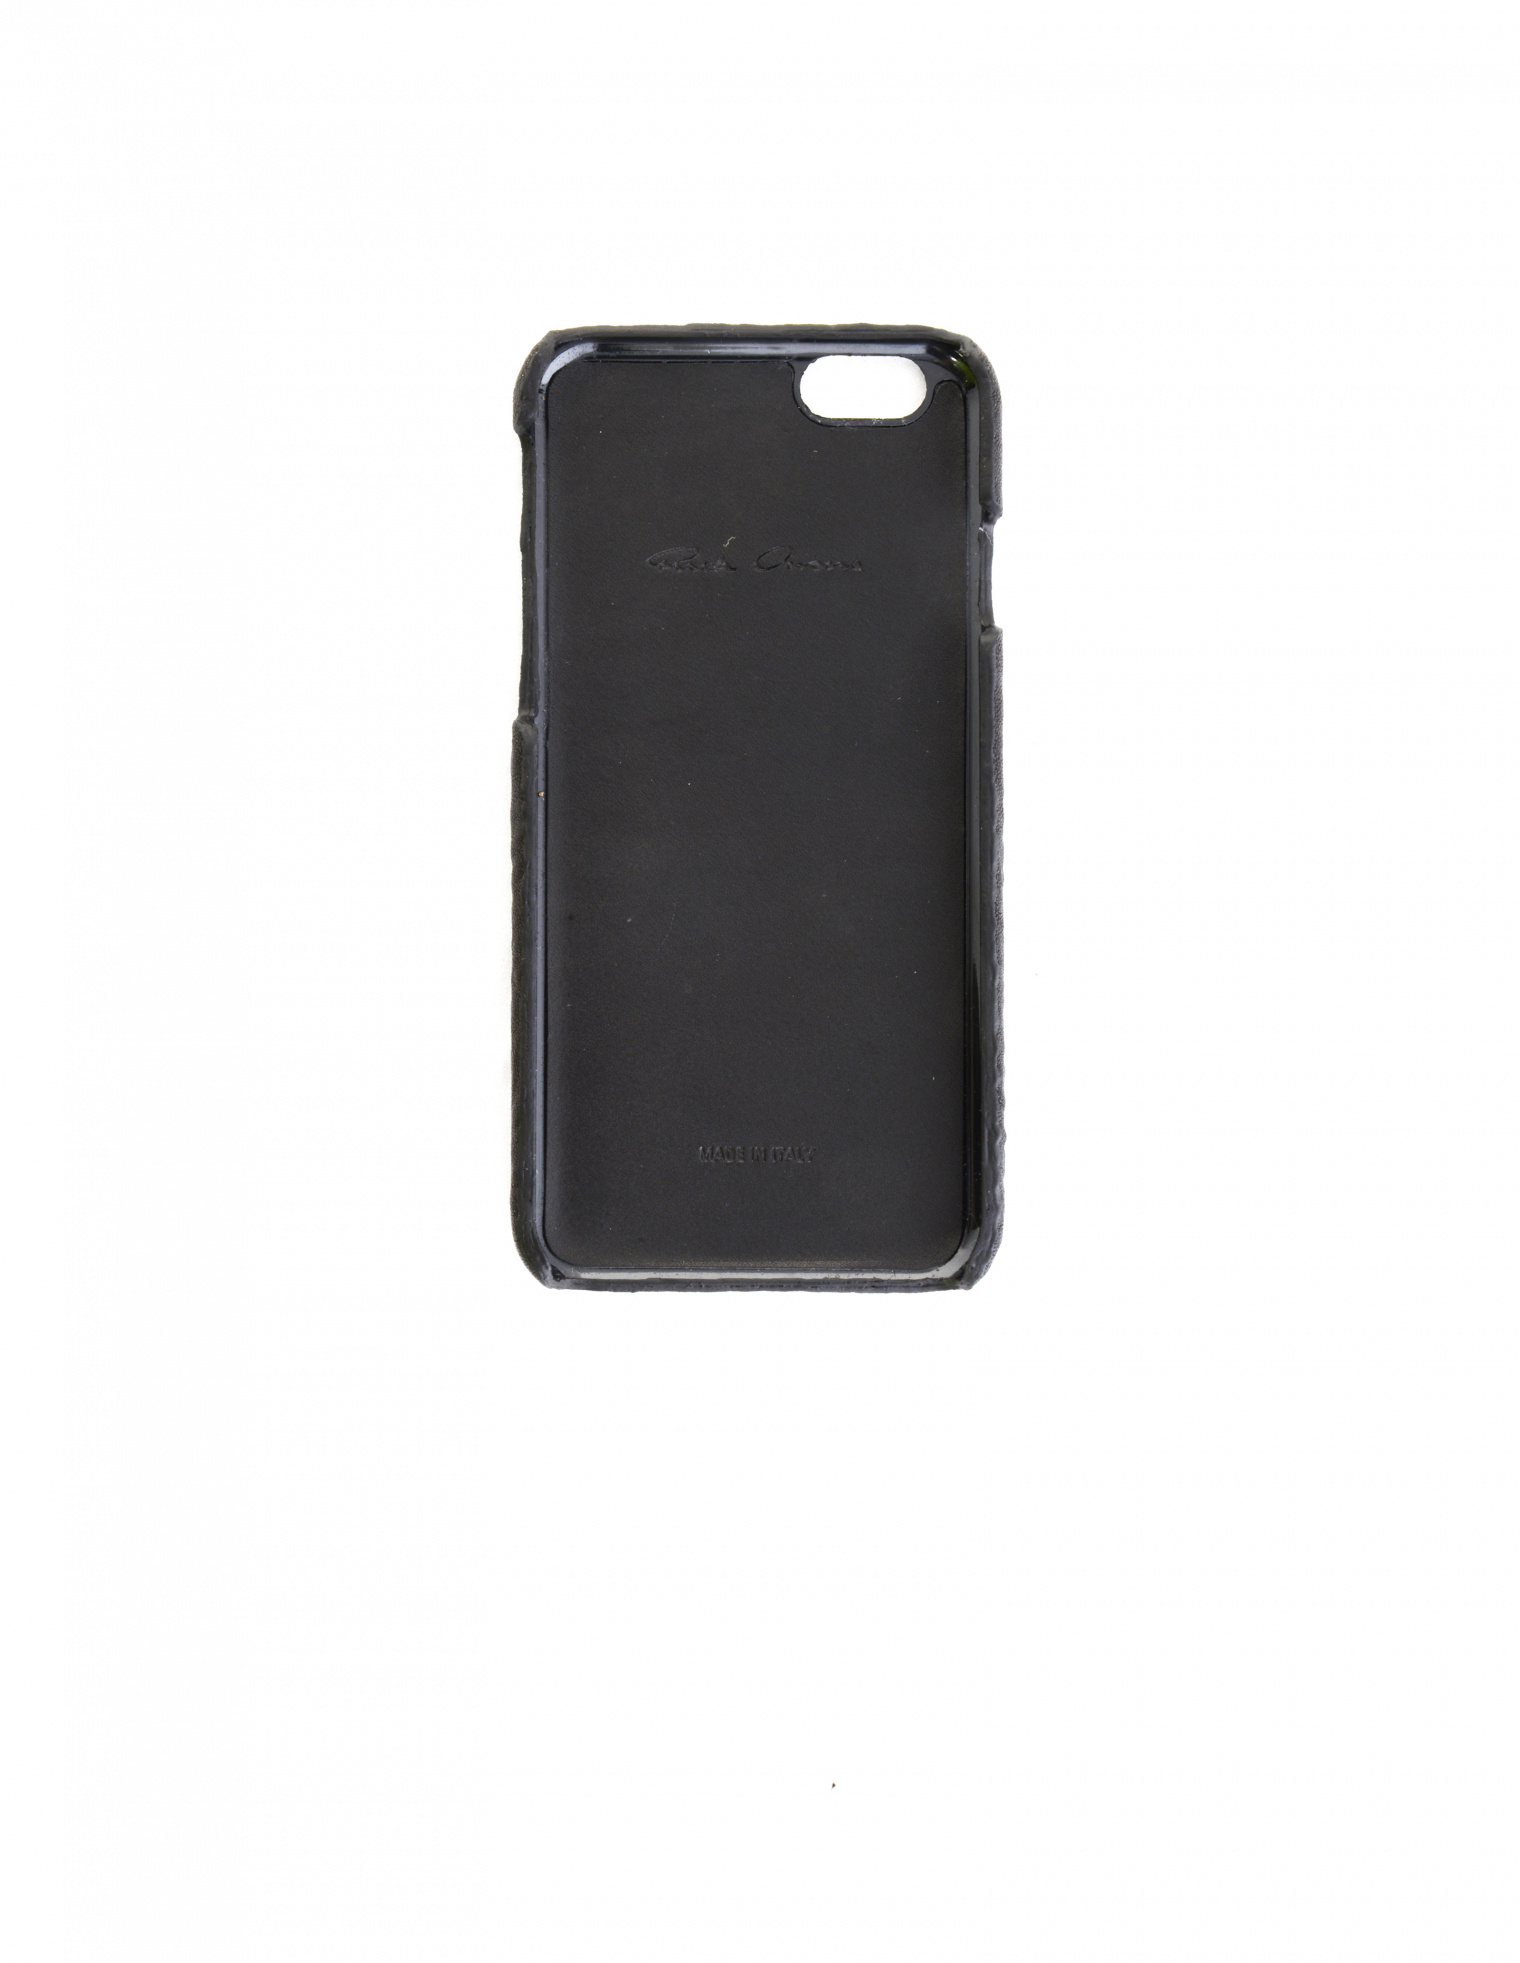 Rick Owens iPhone 6/6s case